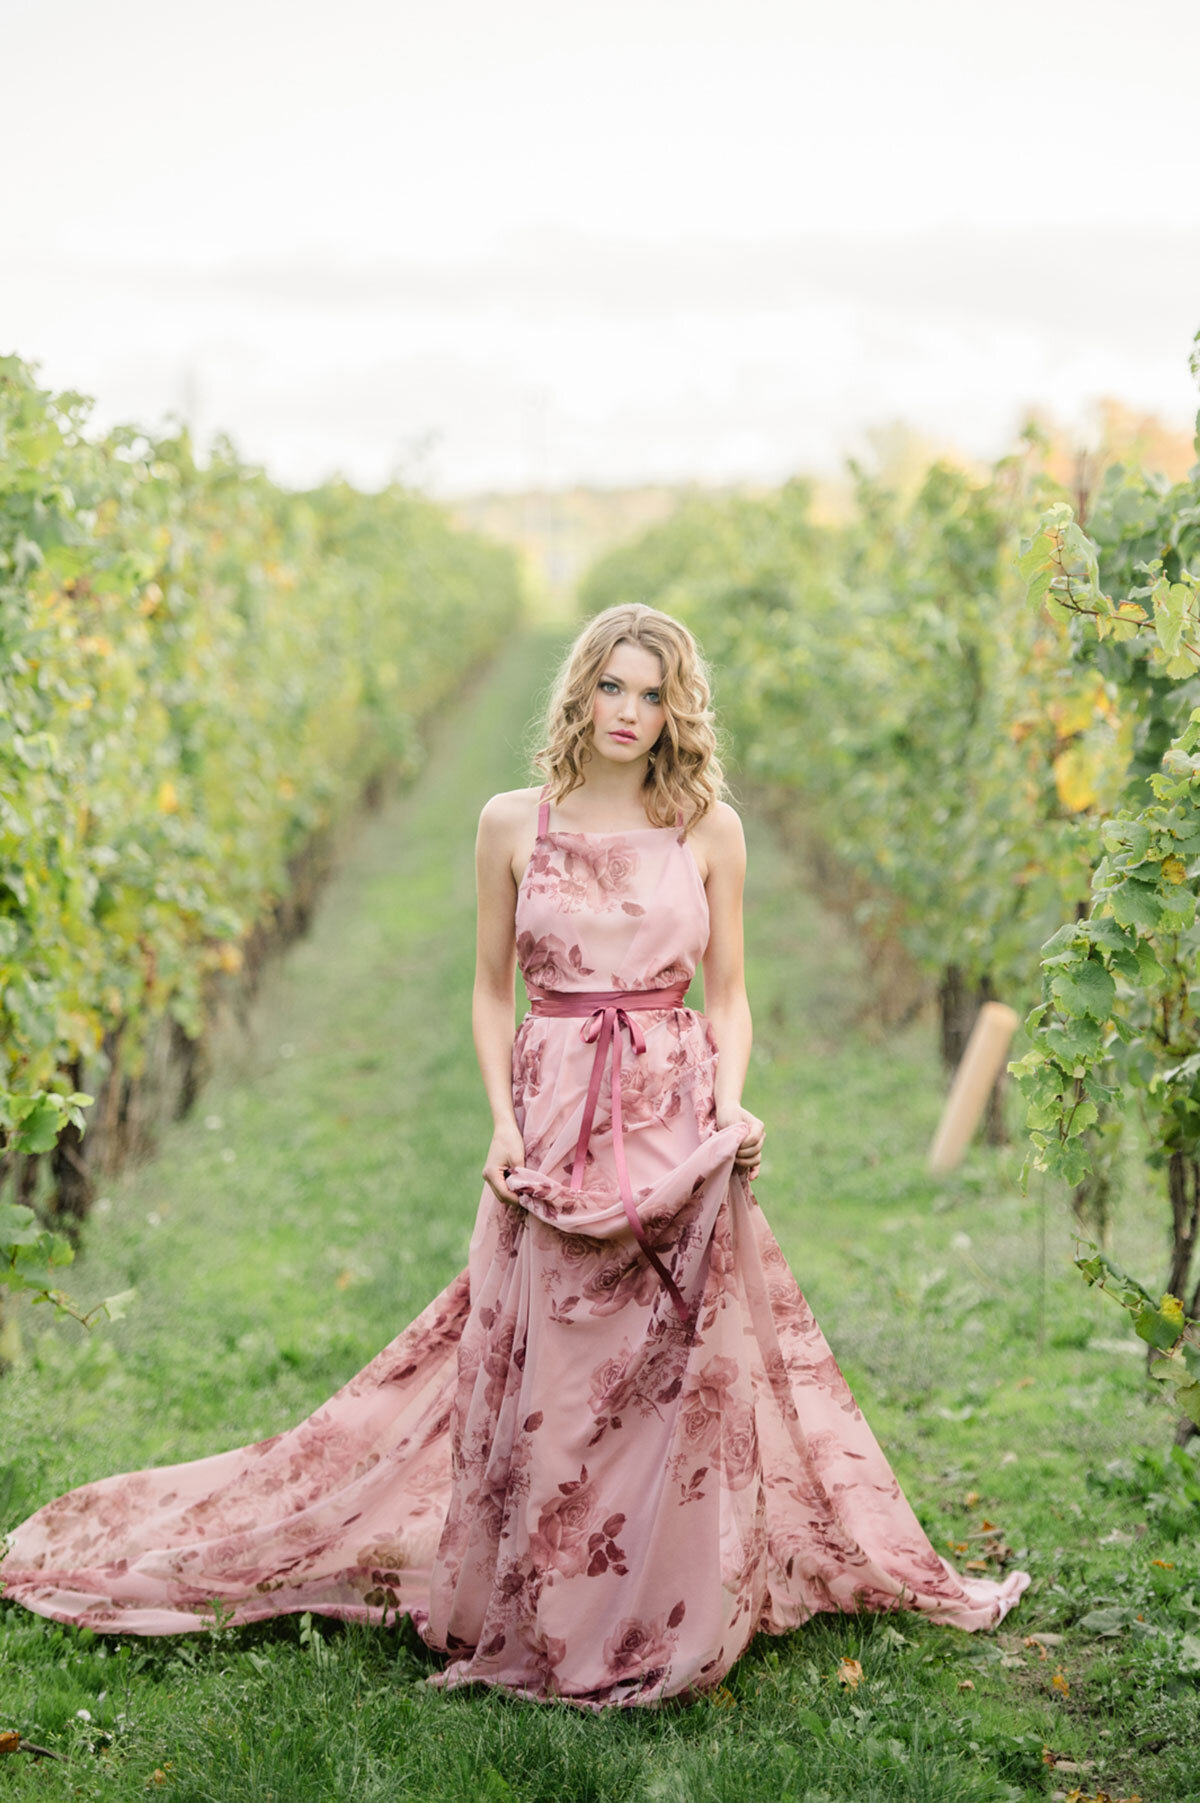 Honsberger-Estate-Winery-Fall-Editorialvineyard-Bride-photo-by-Krista-Fox-Photography-053.jpg